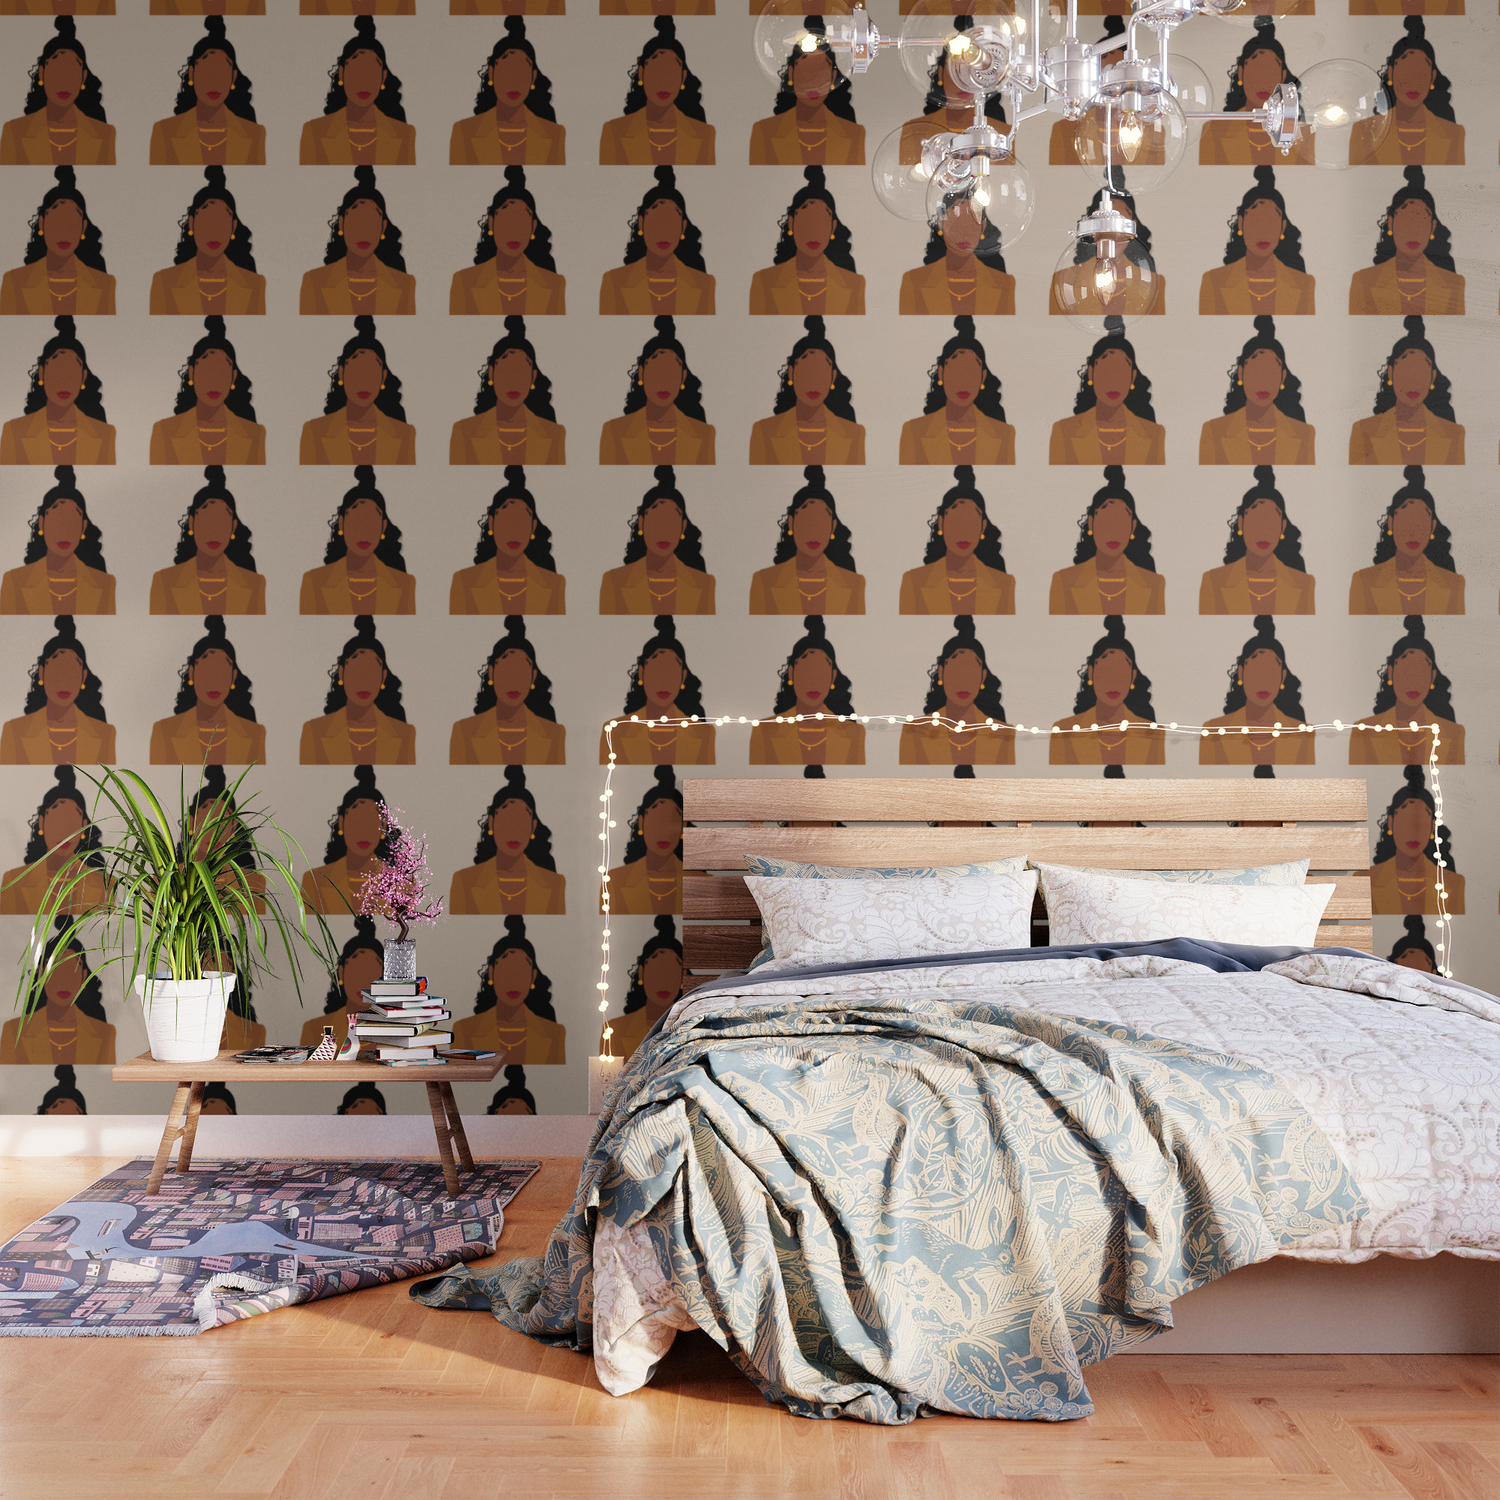 Phenomenal wallpaper by domoink